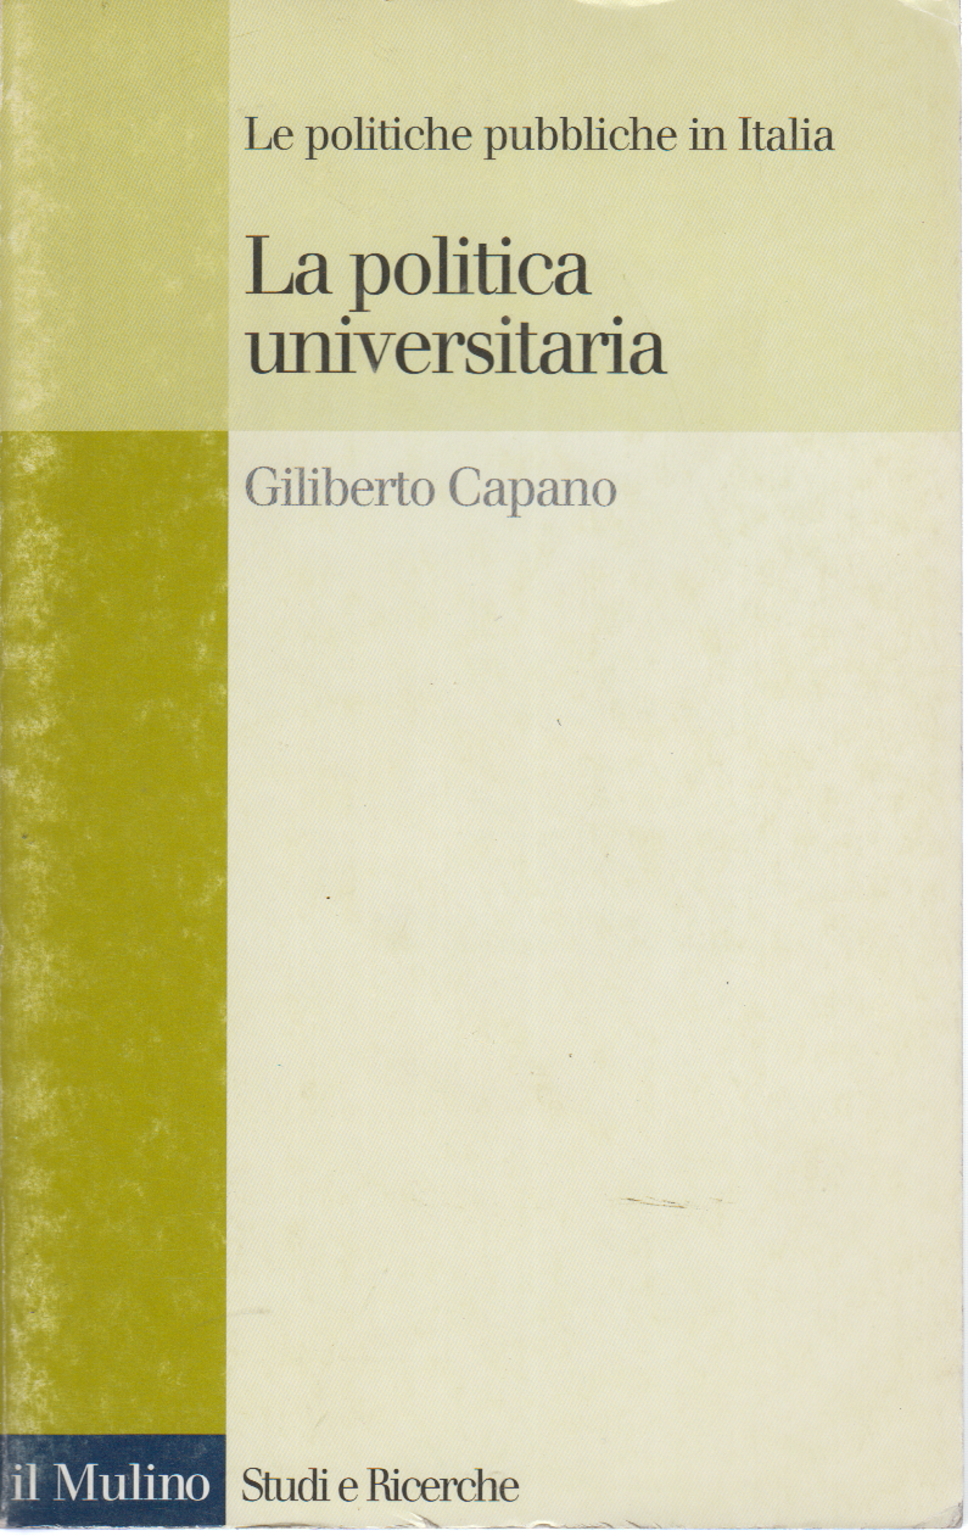 Die hochschulpolitik, Gilberto Capano